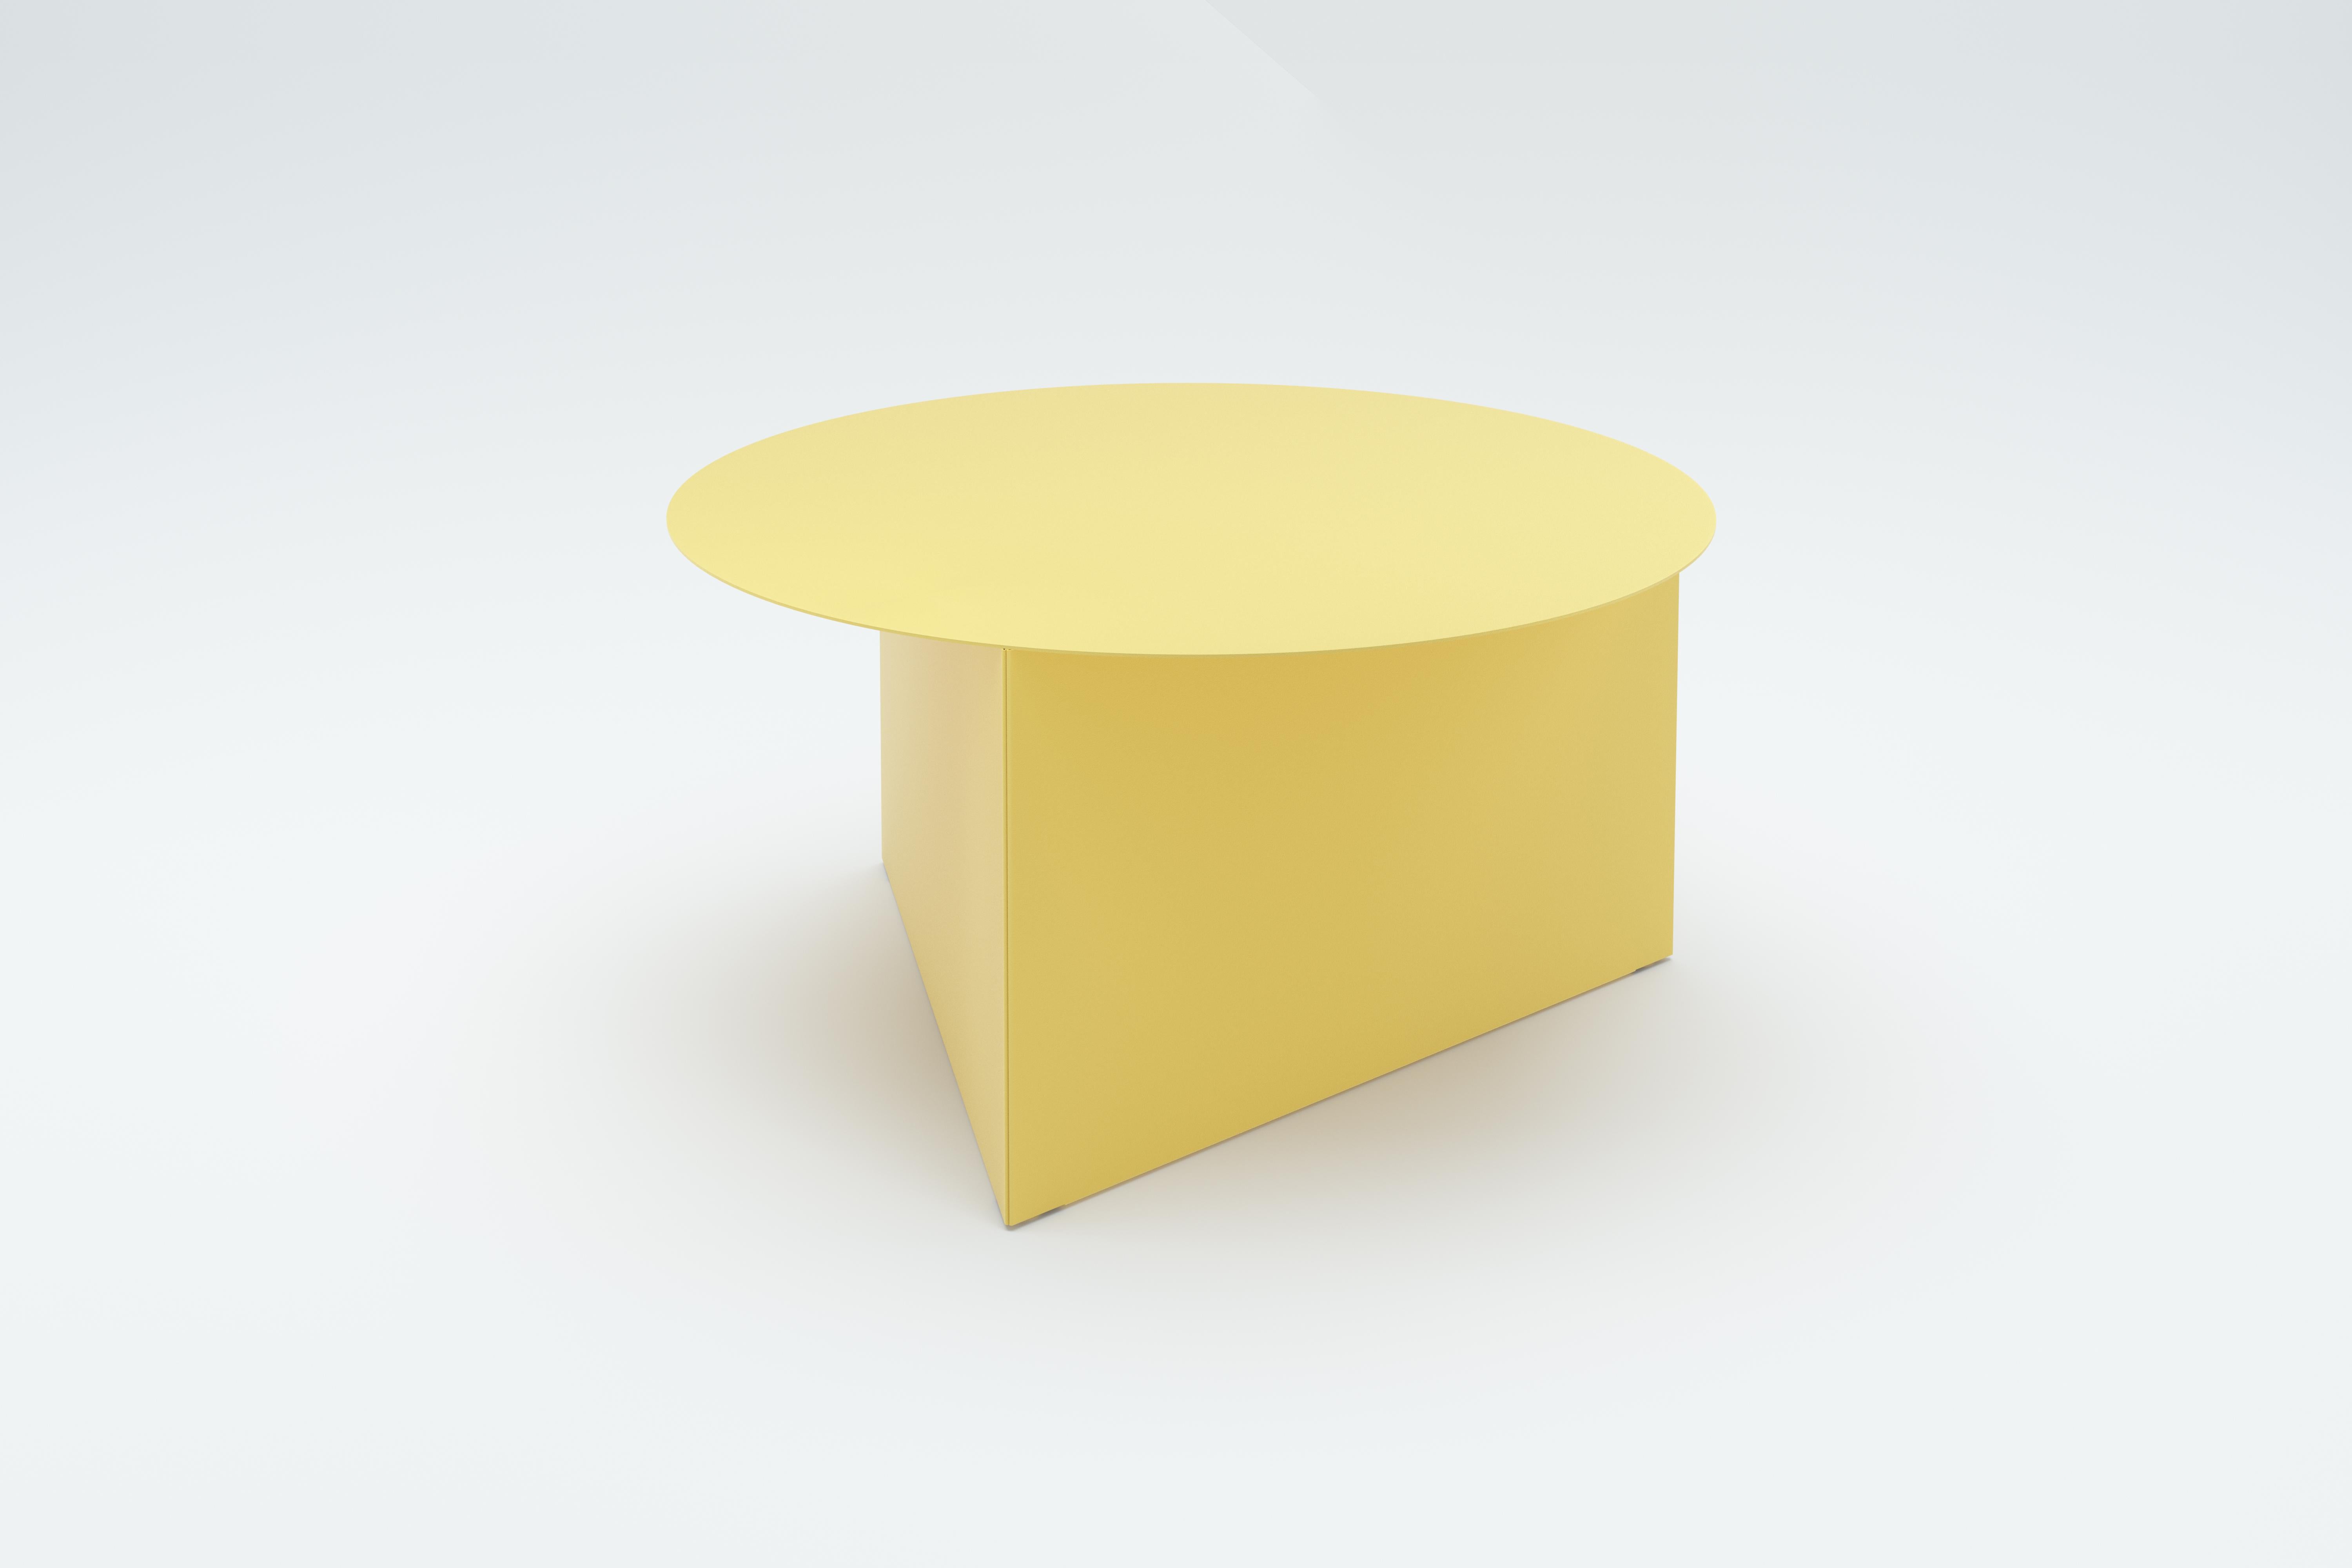 Steel prisma circle 70 coffe table by Sebastian Scherer.
Dimensions: D70x H35 cm.
Materials: Steel.
Weight: 13 kg.
Also Available: Steel (matt): snow white / light sand / sun yellow / clay orange / rust red / navy blue / graphite grey / dark